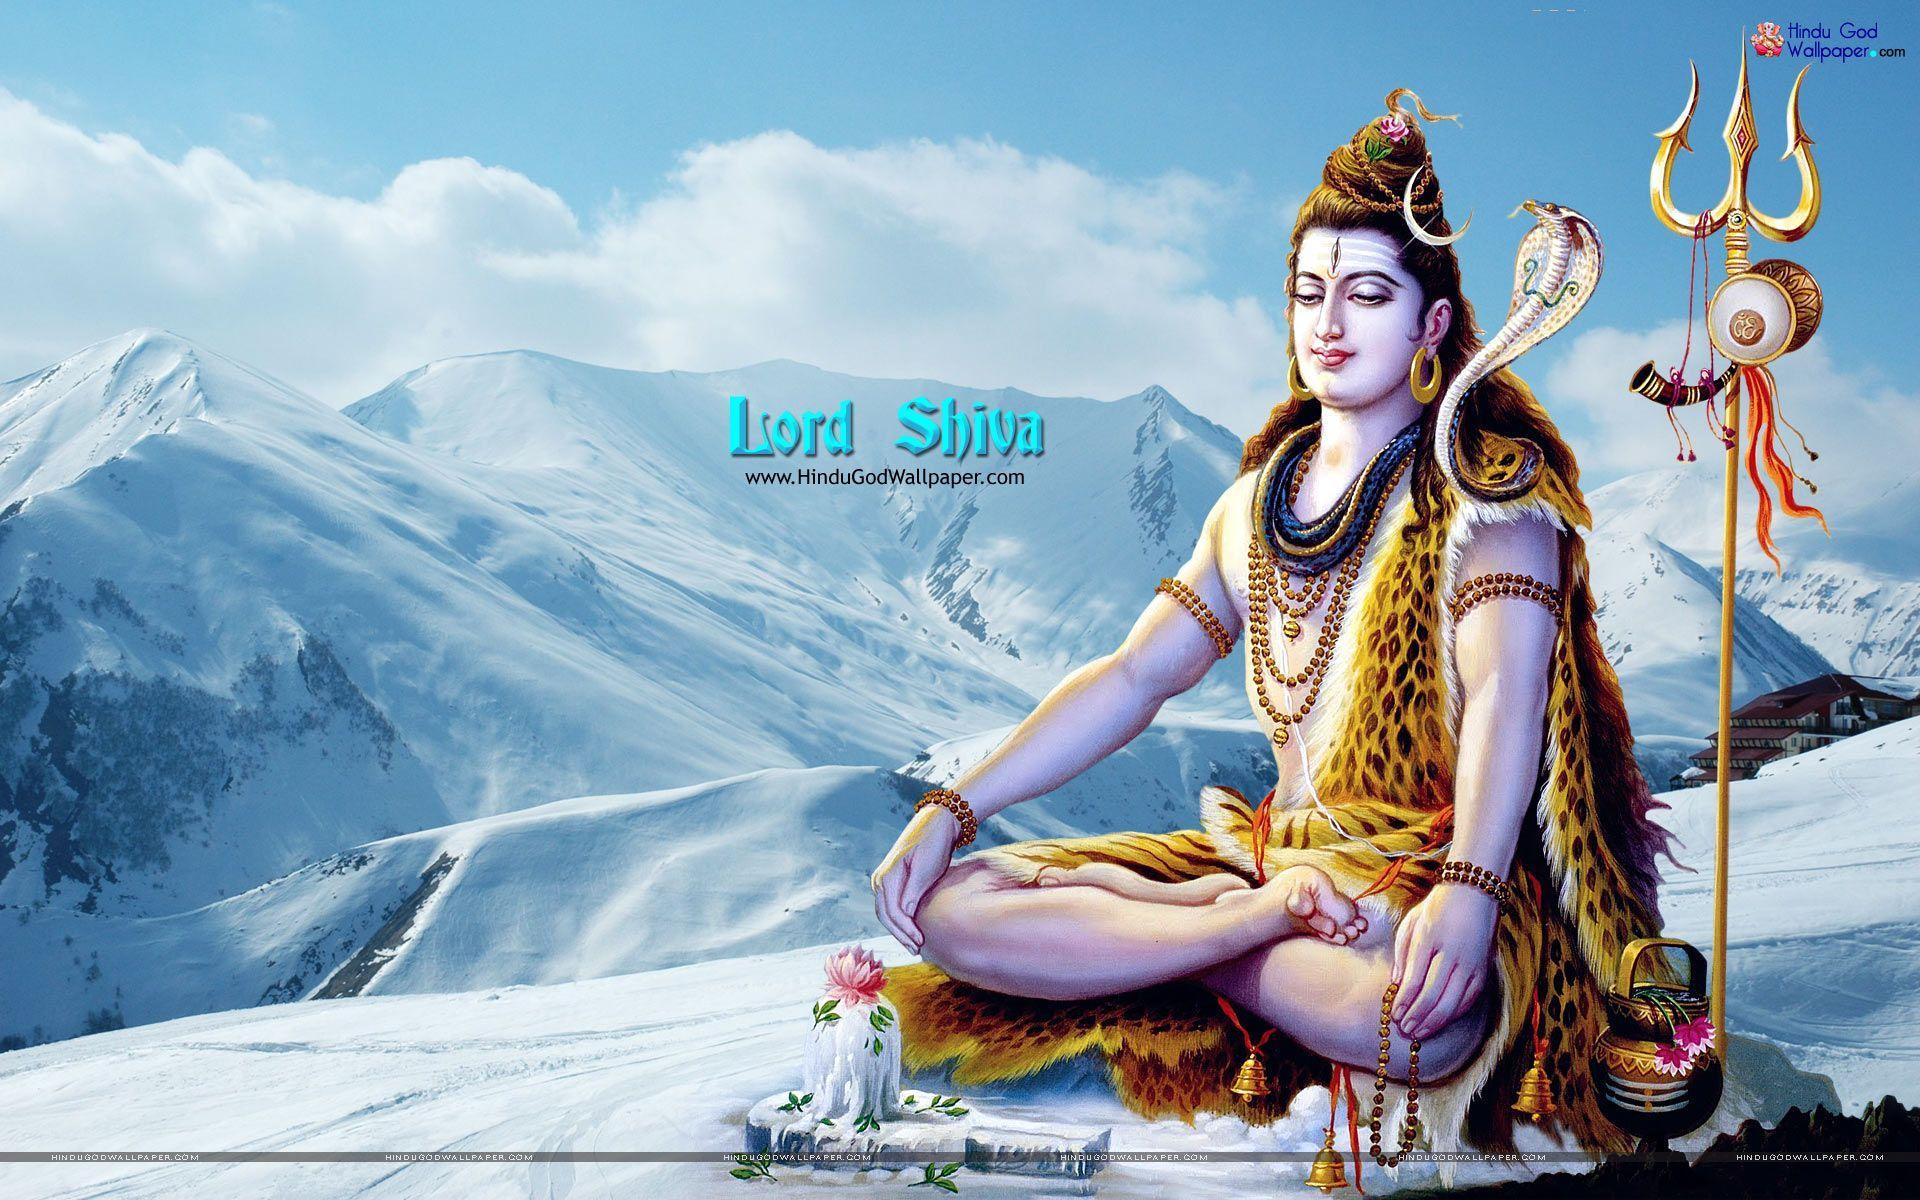 Lord Shiva Wallpaper Full Size Download. Shiva wallpaper, Lord